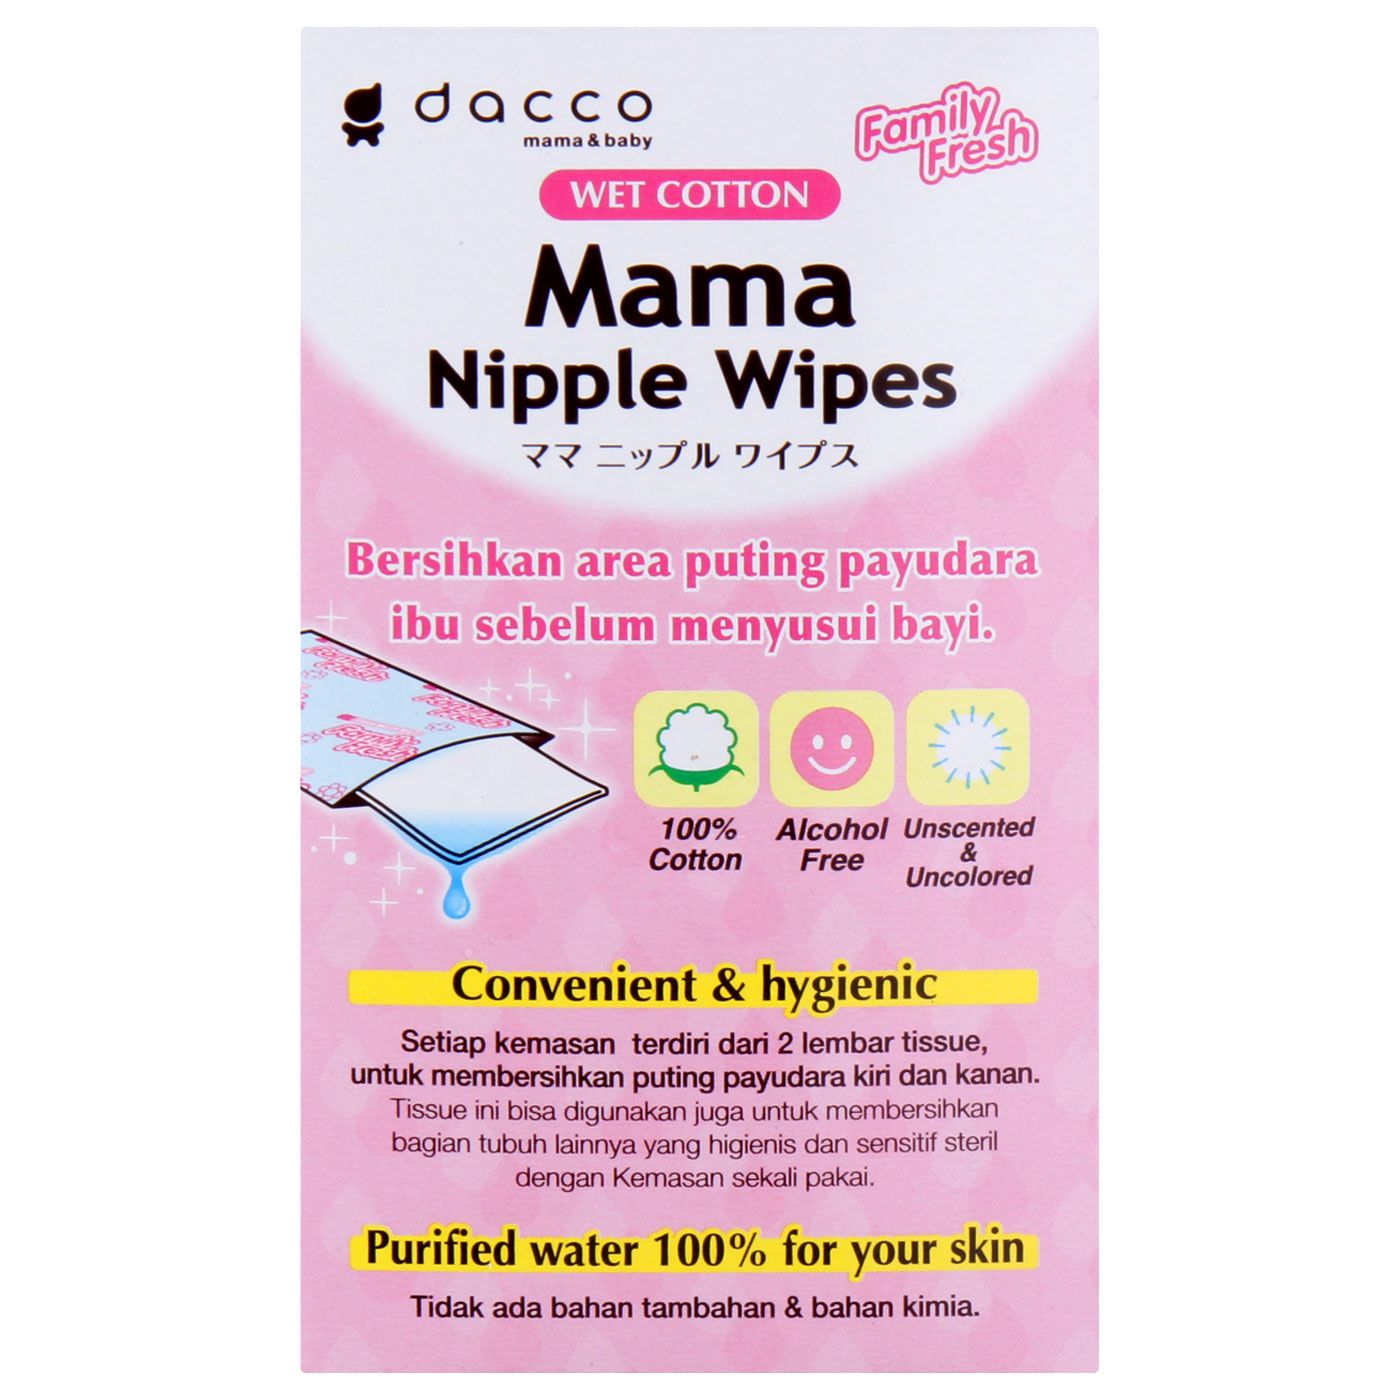 Dacco Mama Nipple Wipes - 3